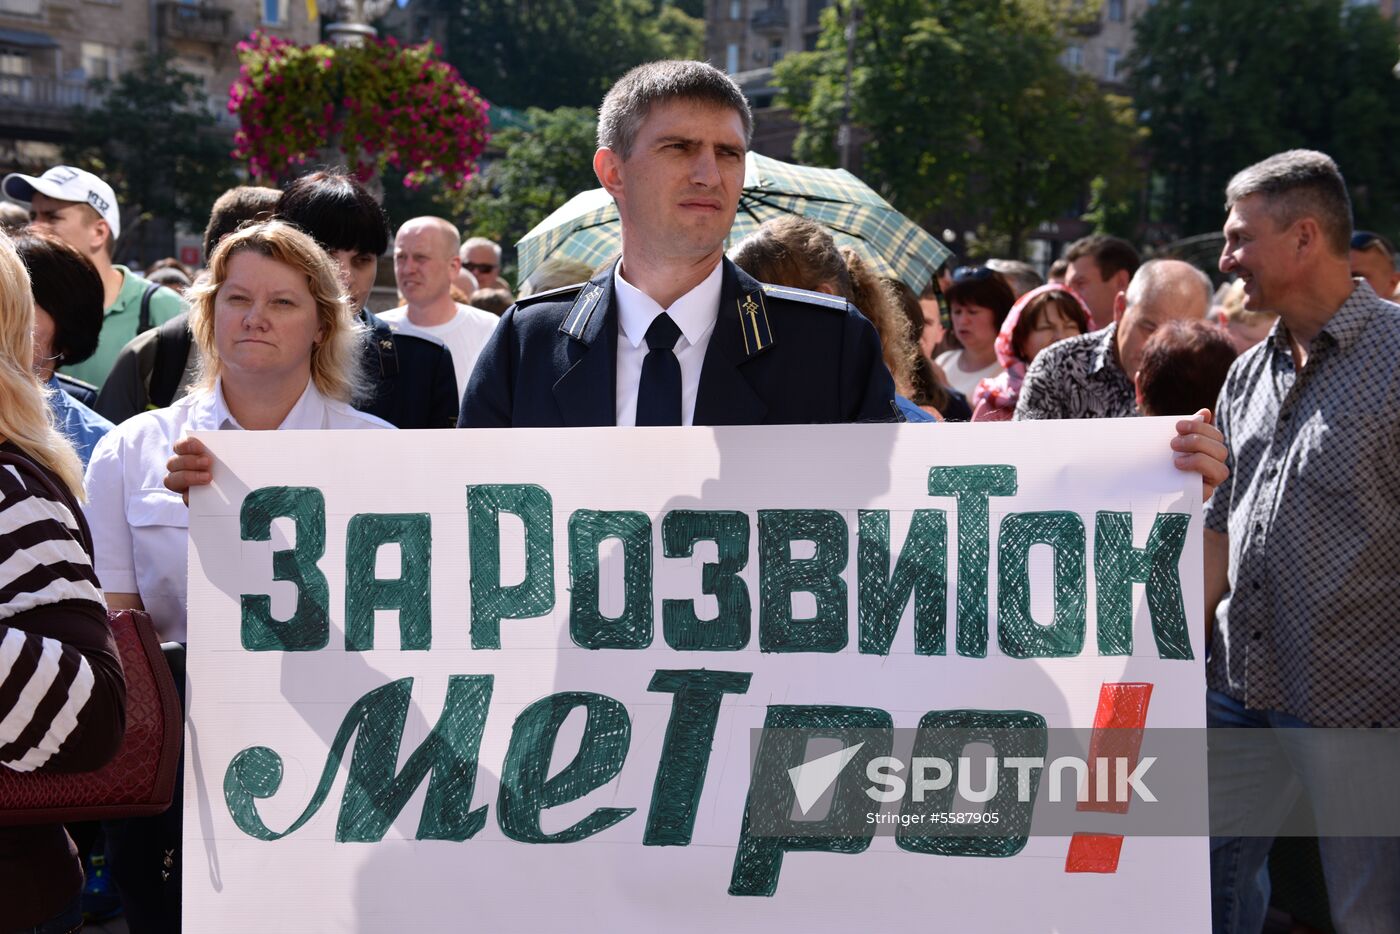 Protest against raising fare in Kiev